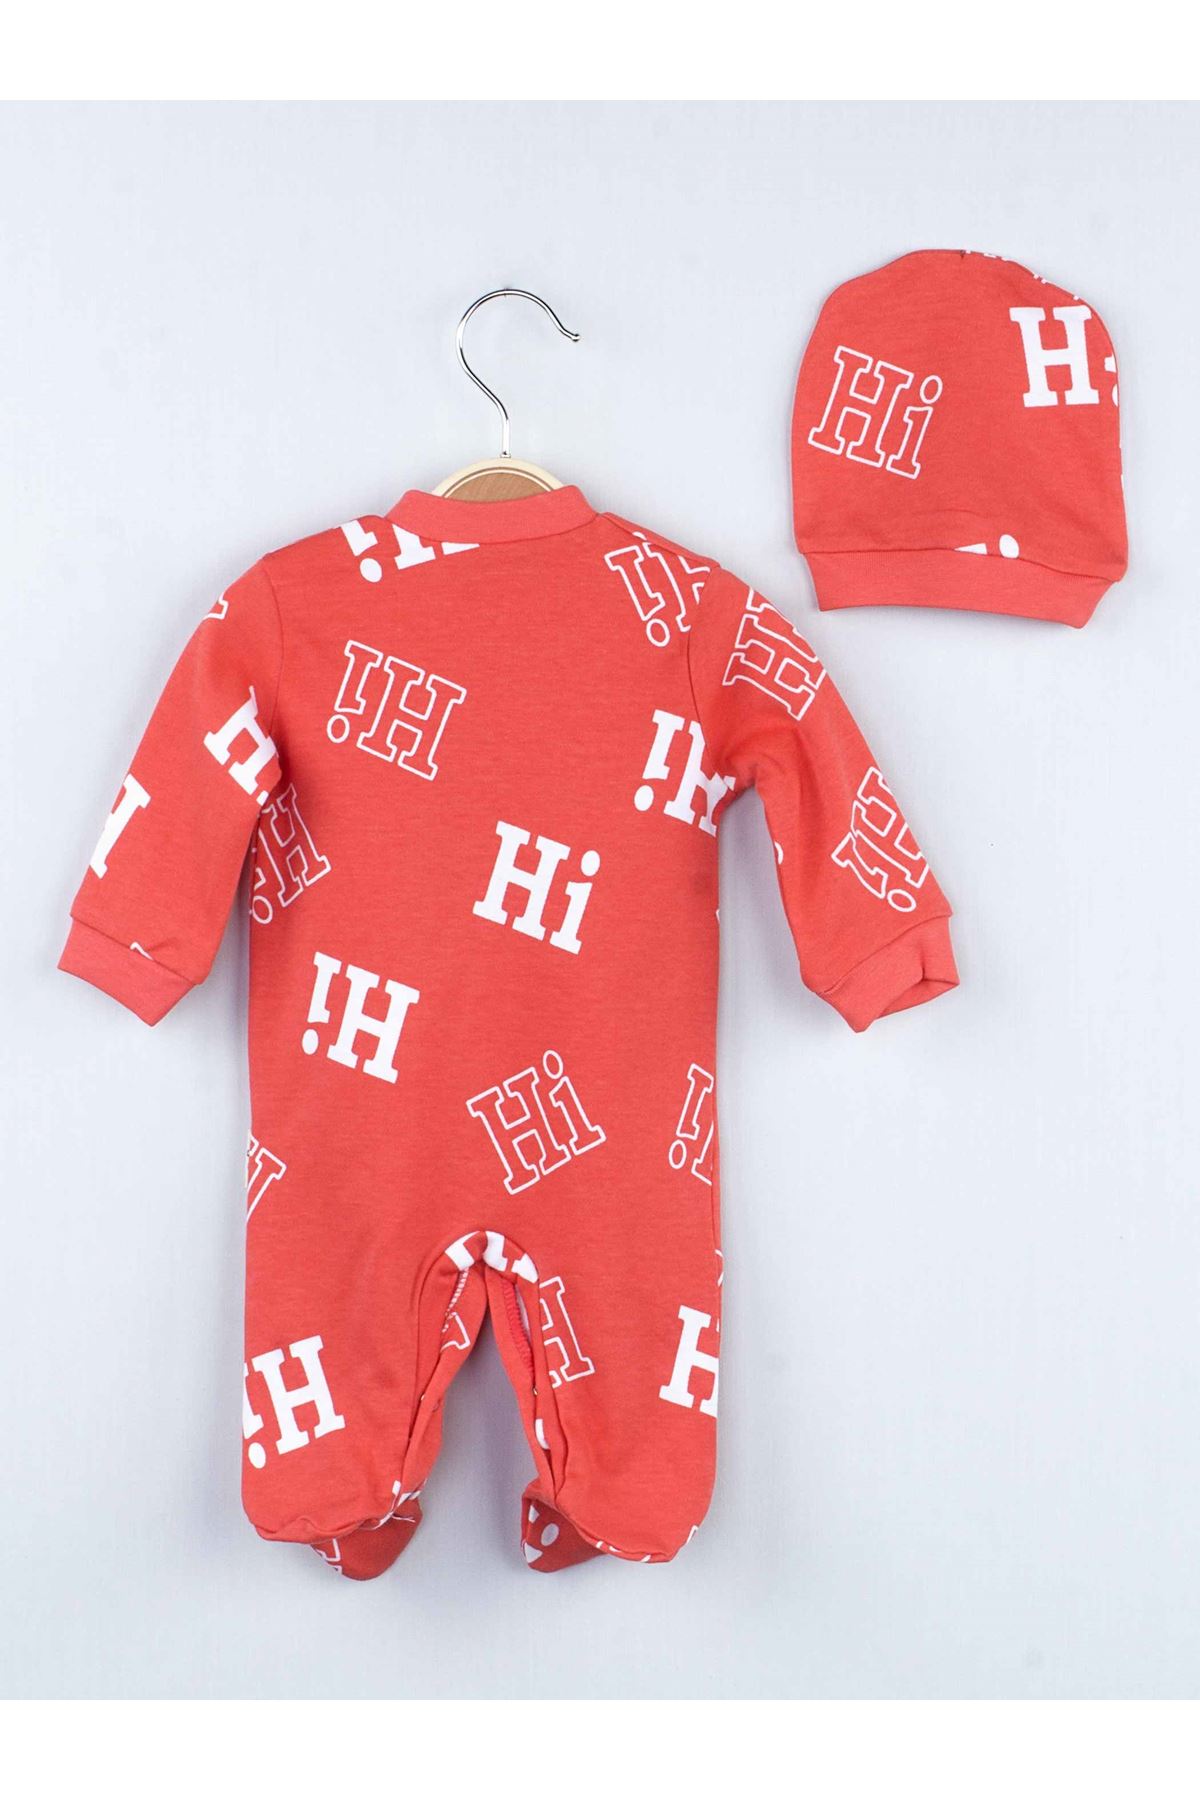 Orange baby boy hat overalls cotton clothing babies models clothing comfortable seasonal